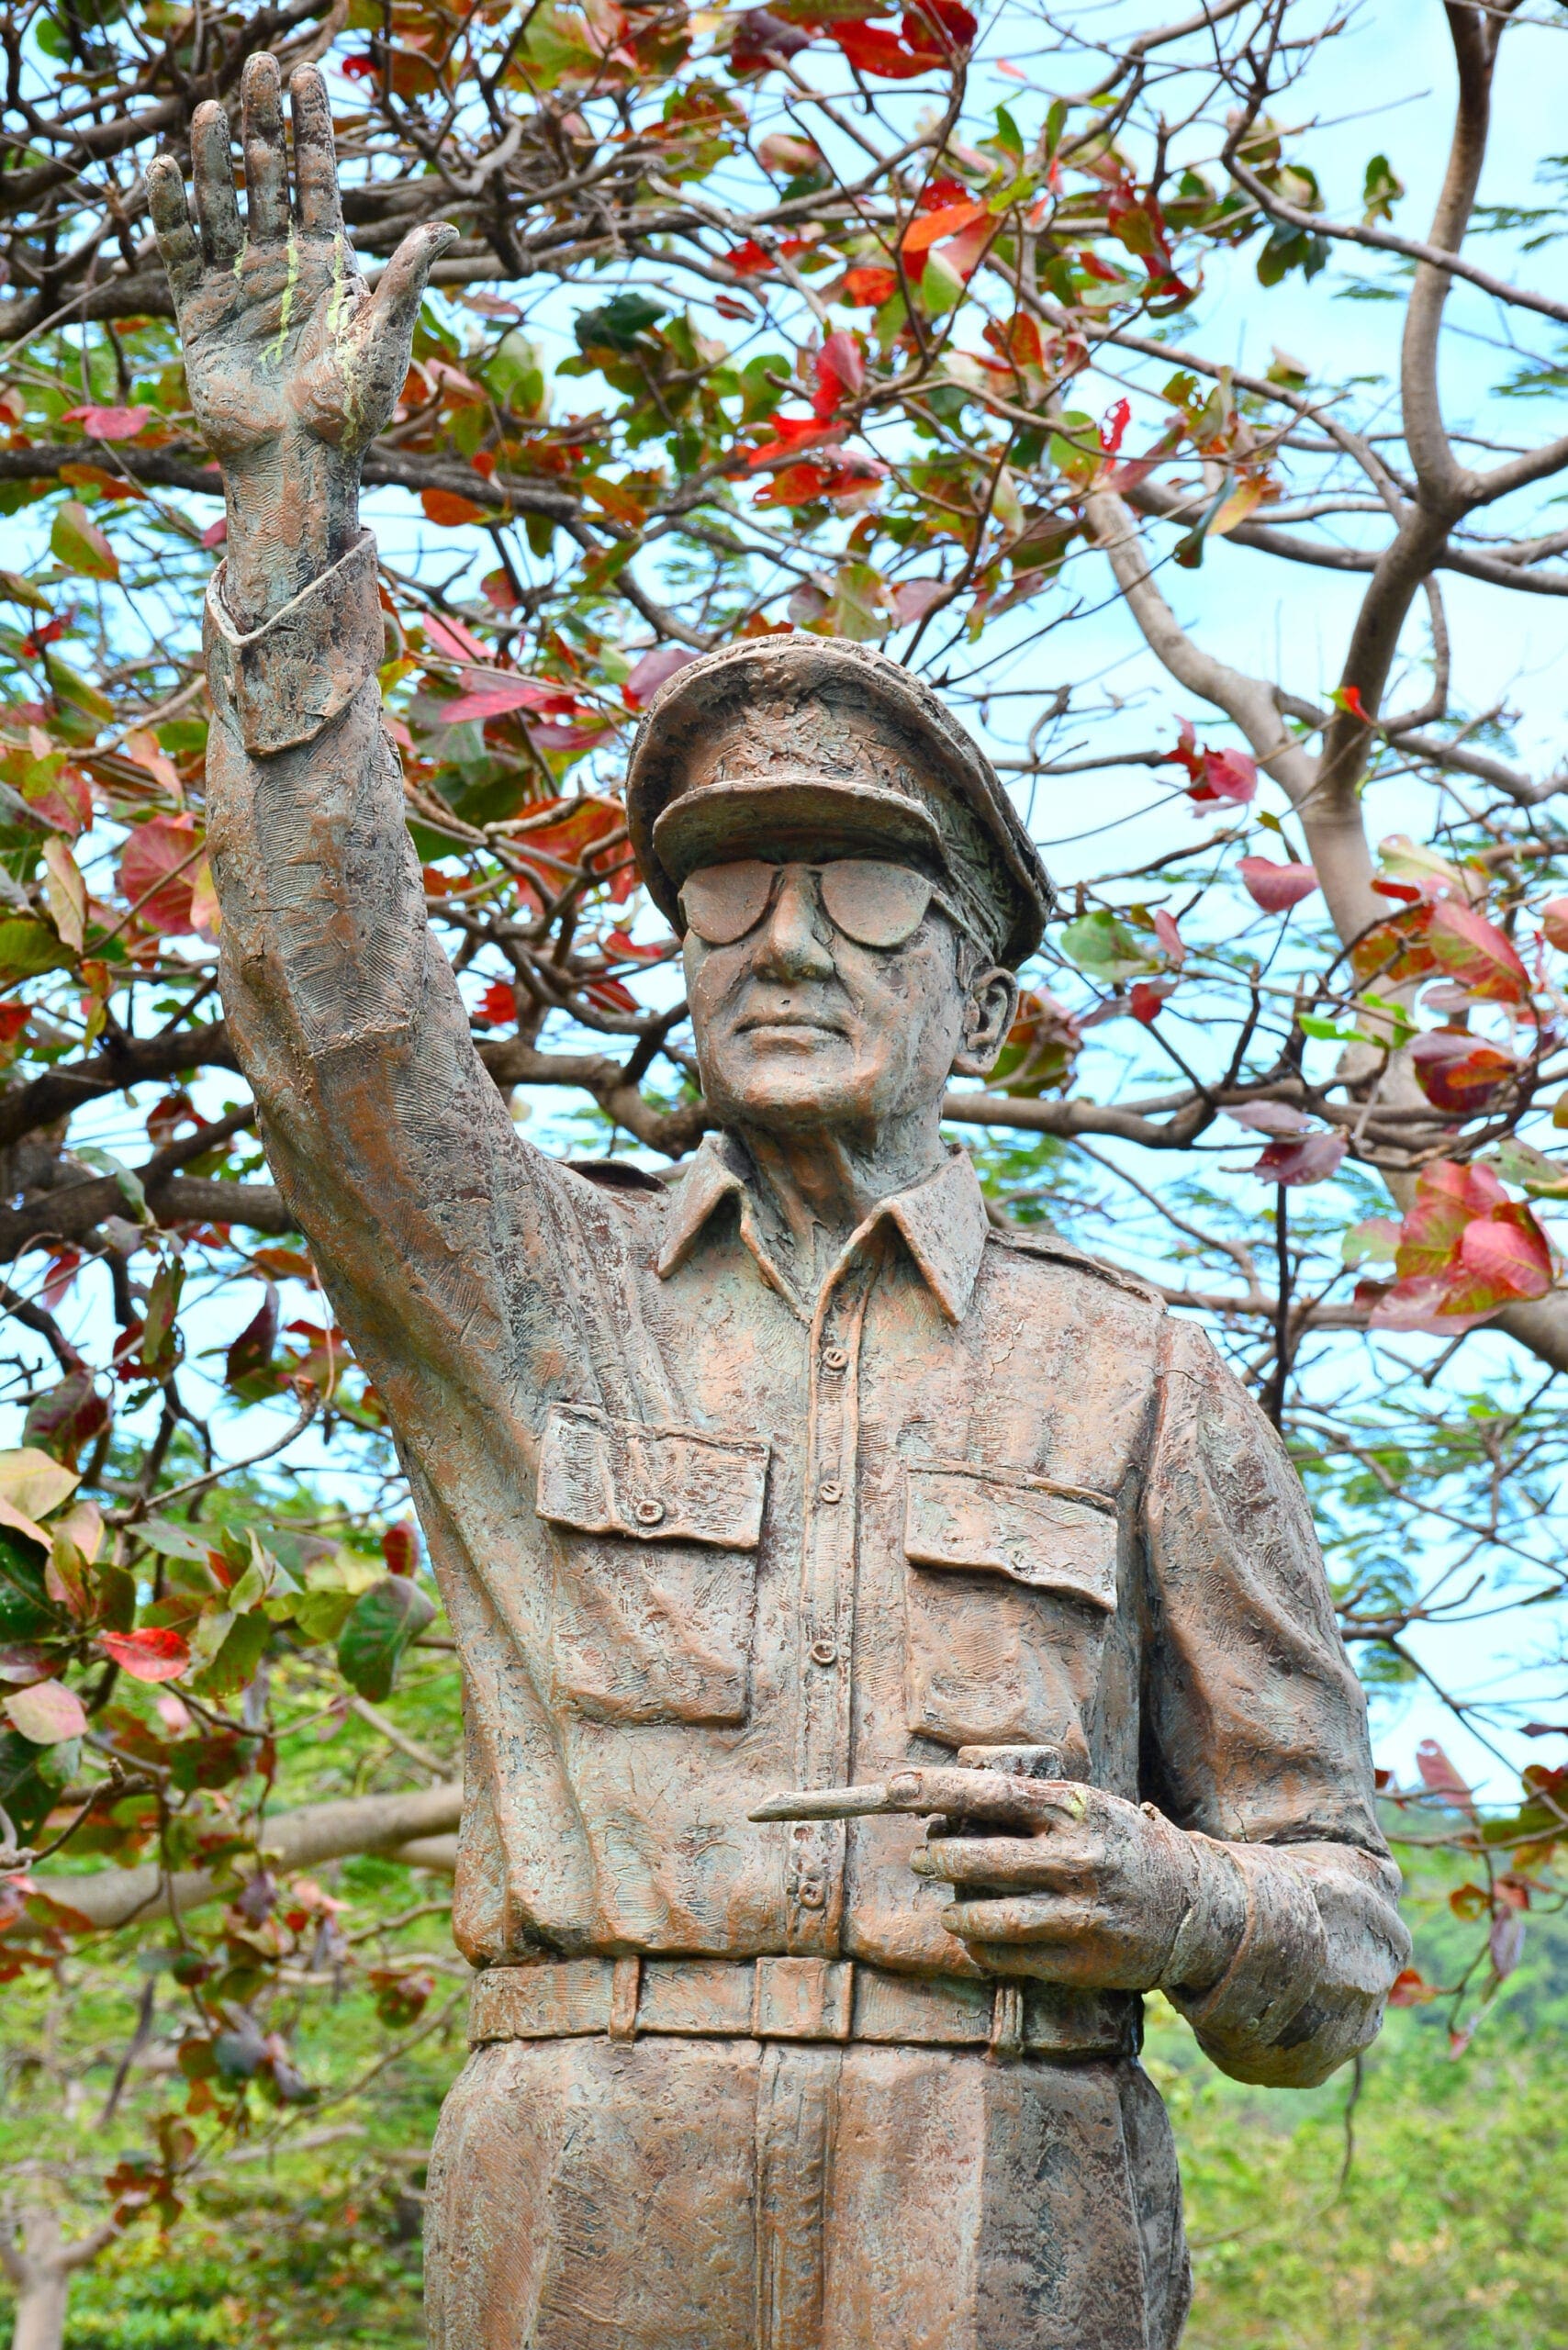 General MacArthur statue wearing aviators